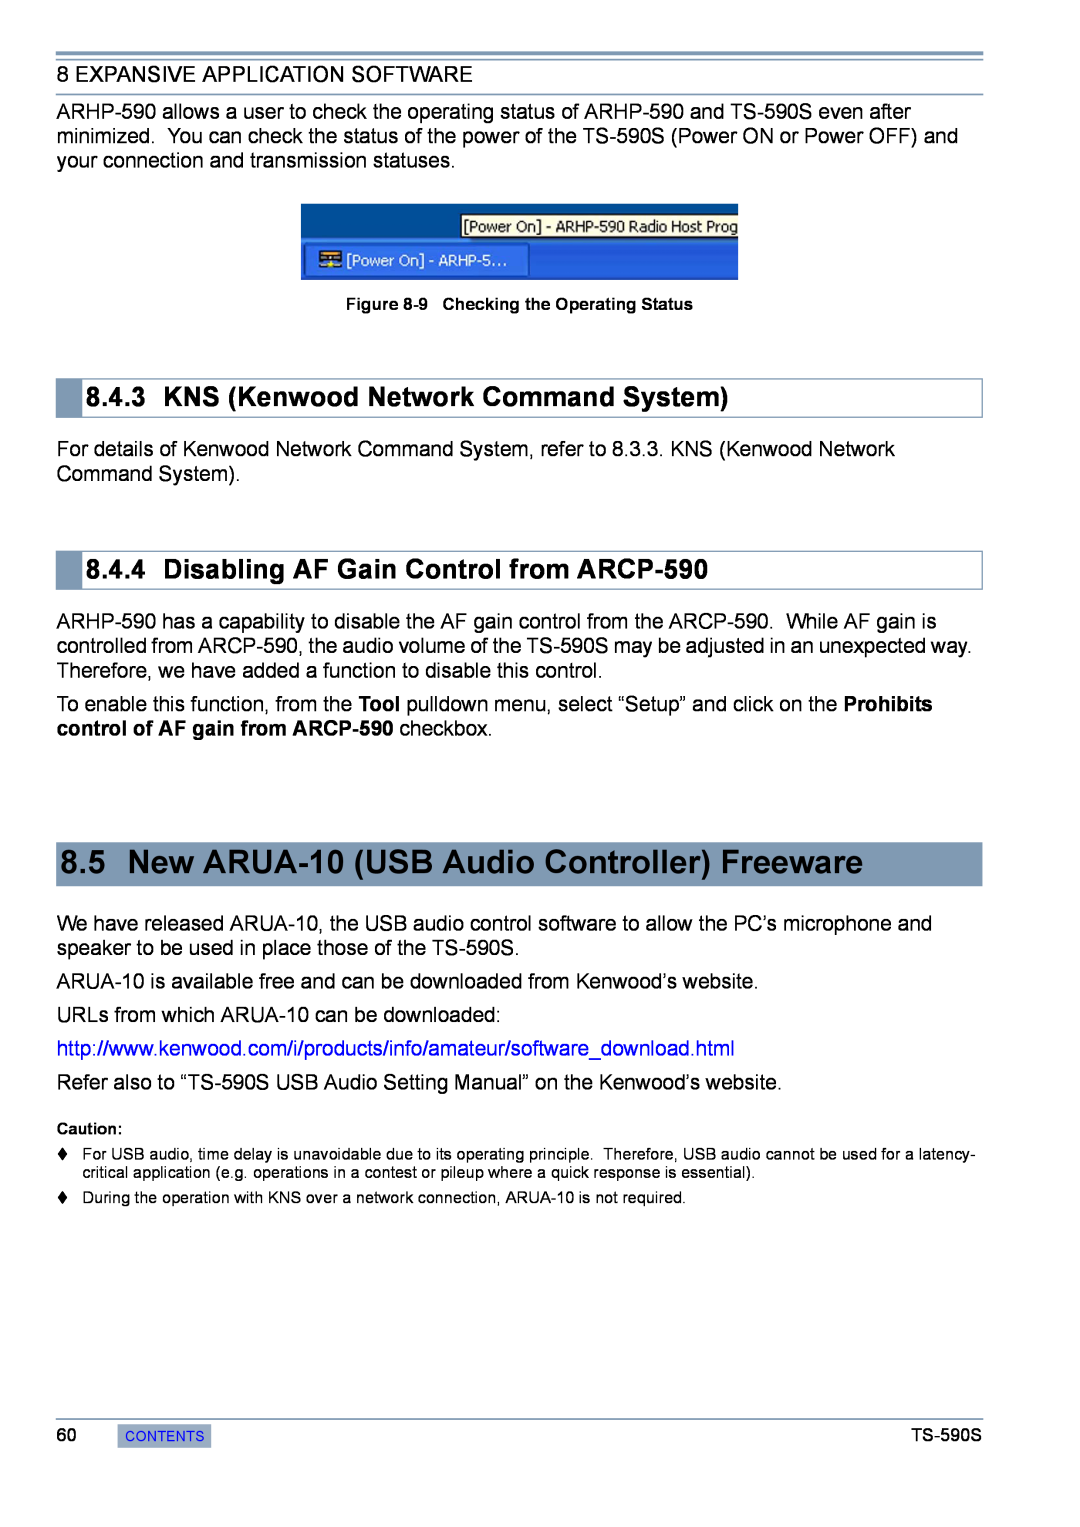 Kenwood TS-590S manual New ARUA-10USB Audio Controller Freeware, KNS Kenwood Network Command System 